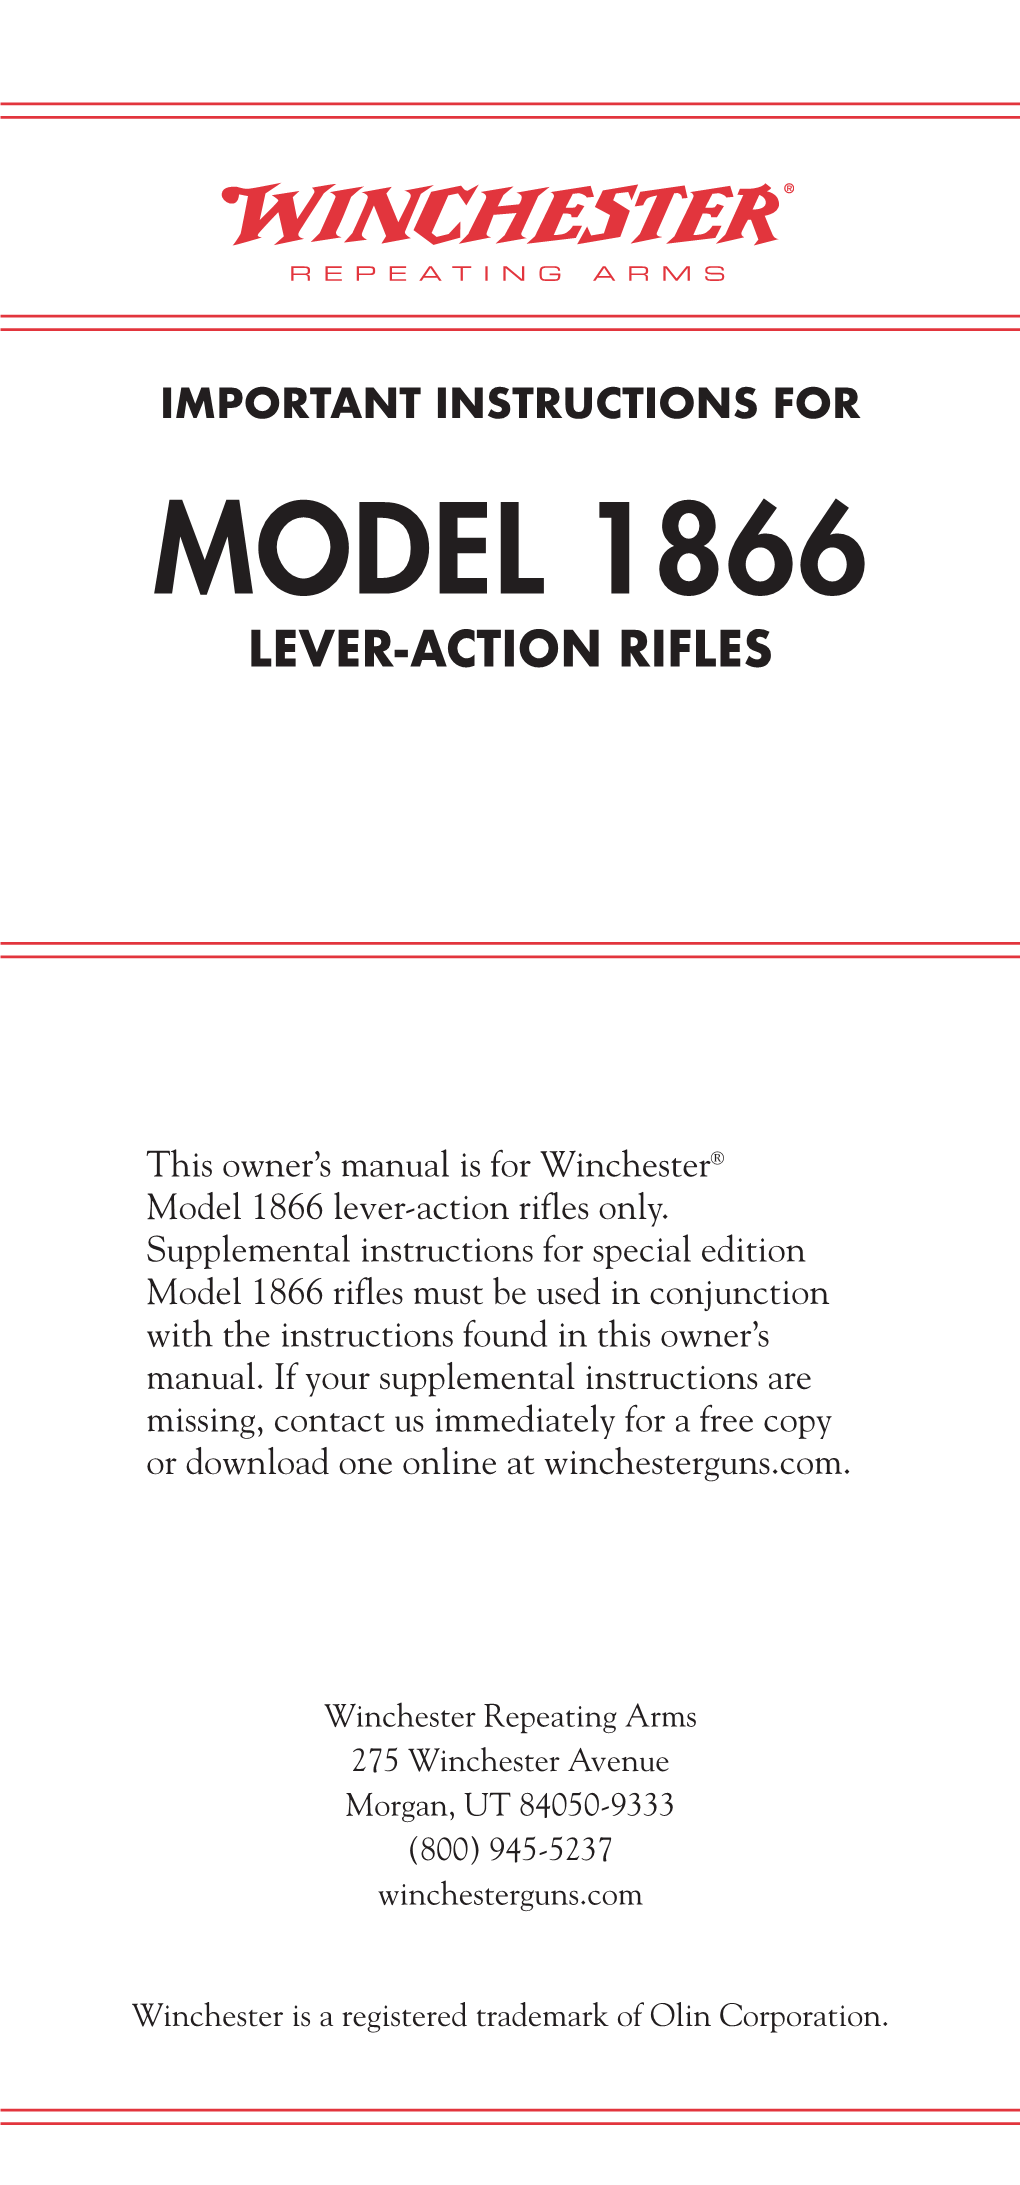 Model 1866 Lever-Action Rifles